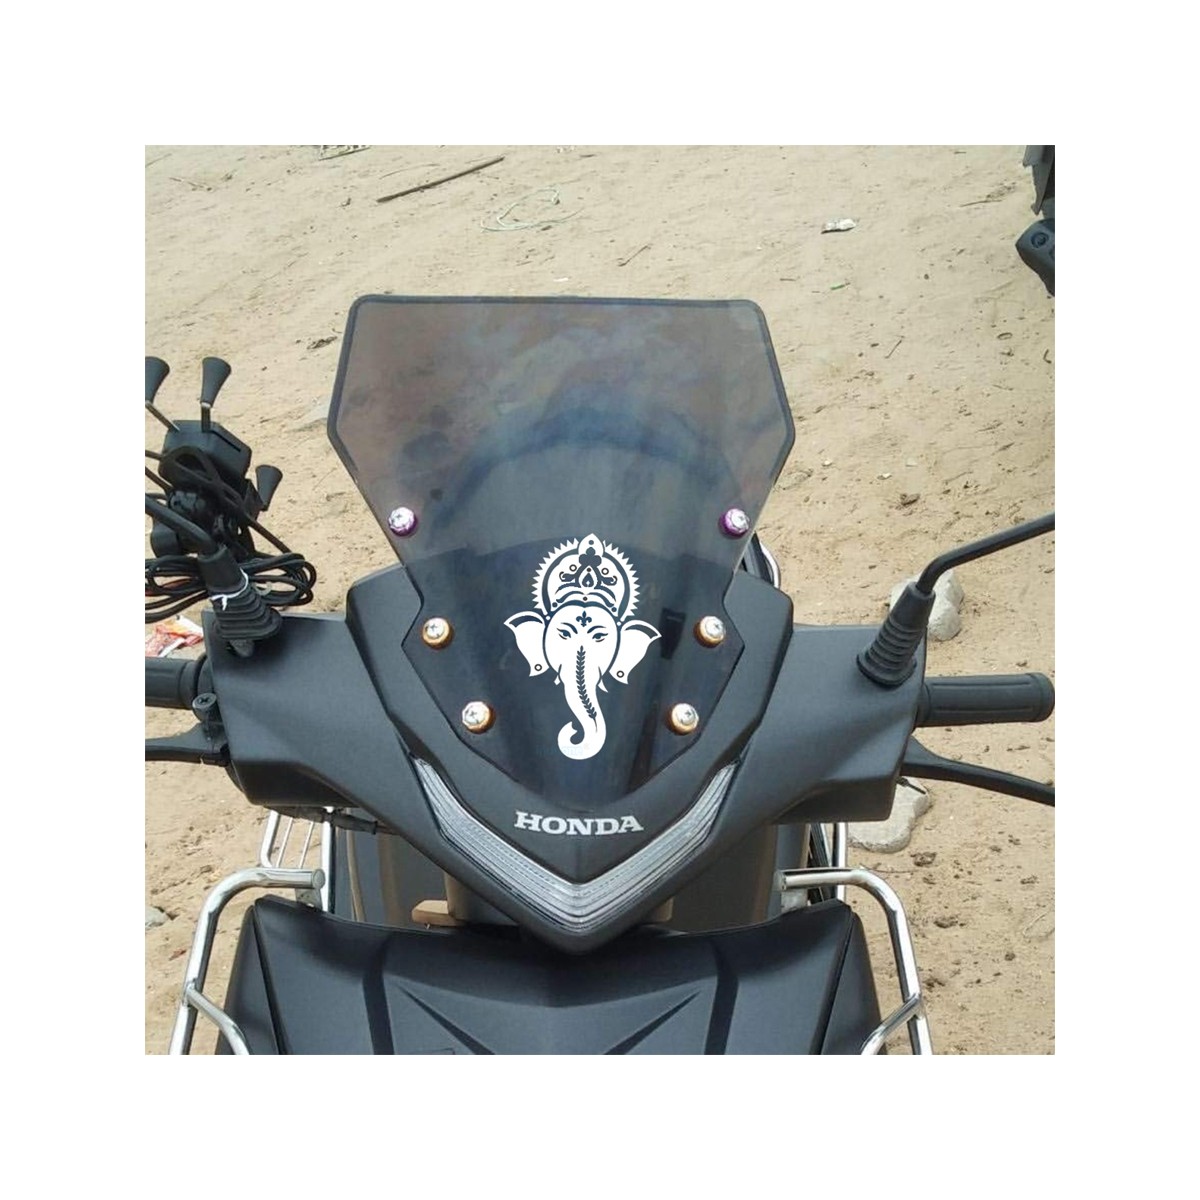 indnone® GOD Ganesh Logo Sticker for Bike Water Proof PVC Vinyl Decal Sticker | Orange Color Standard Size